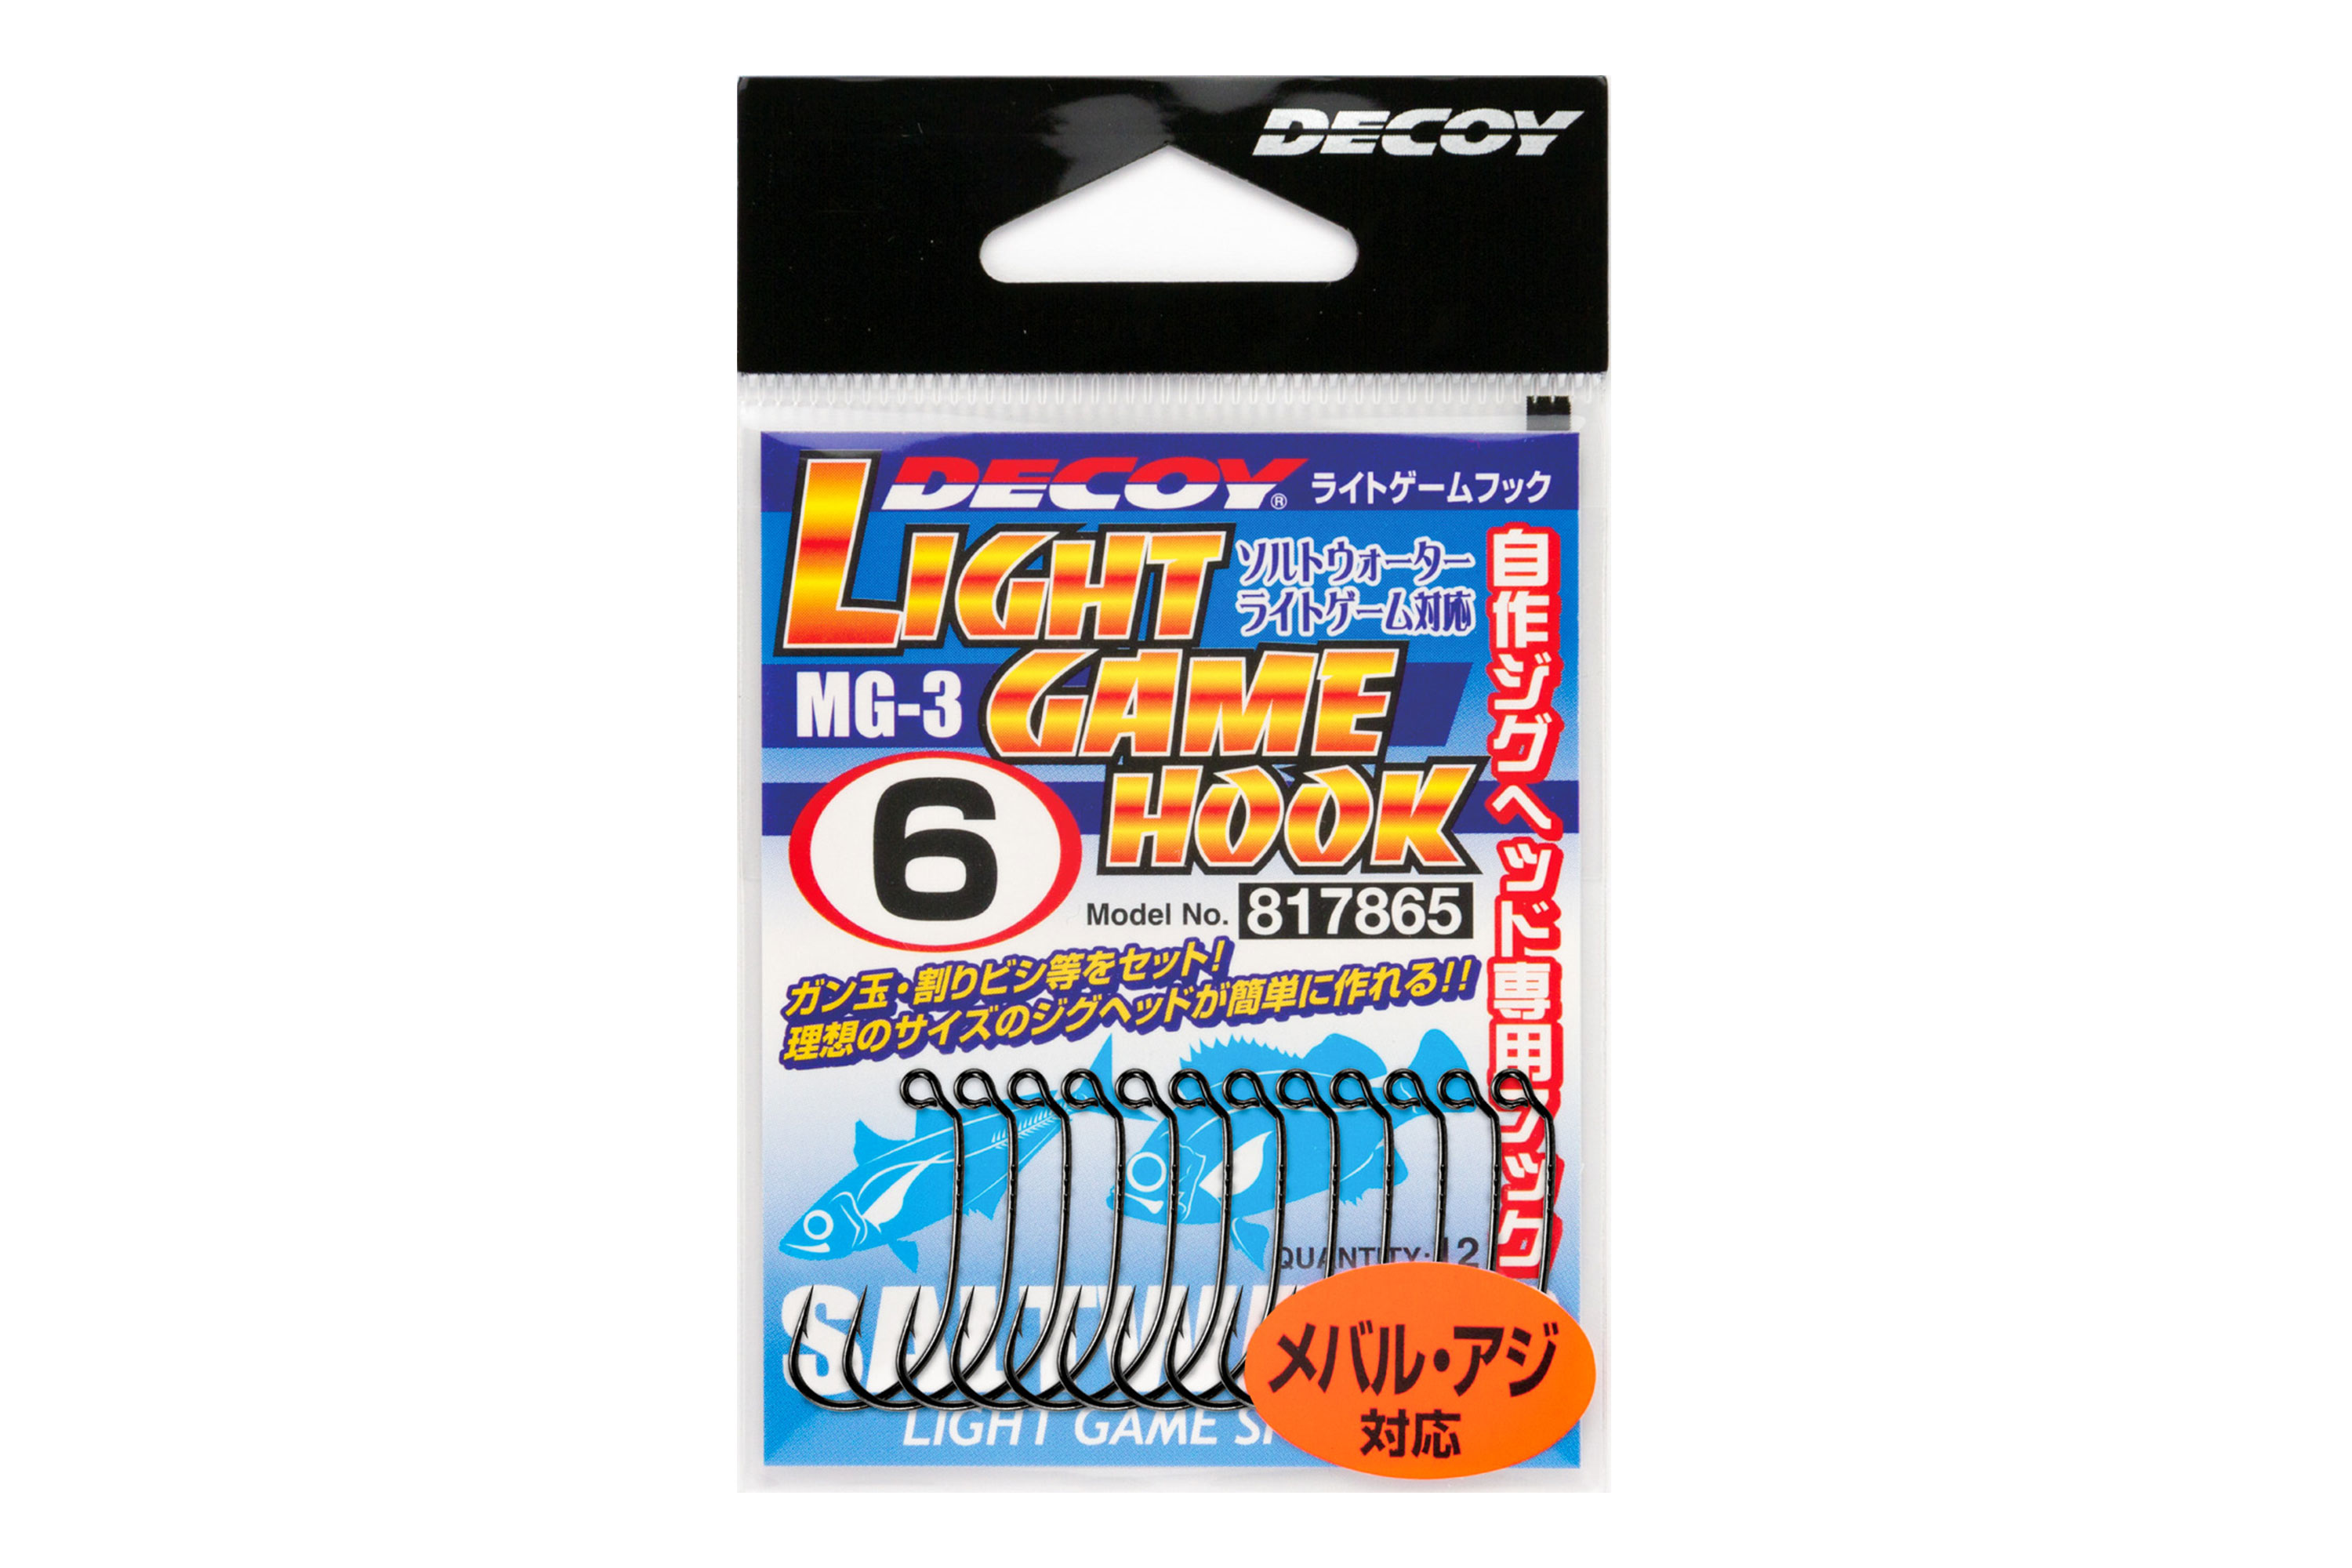 Amo Decoy MG-3 Light Game Hook Size 6